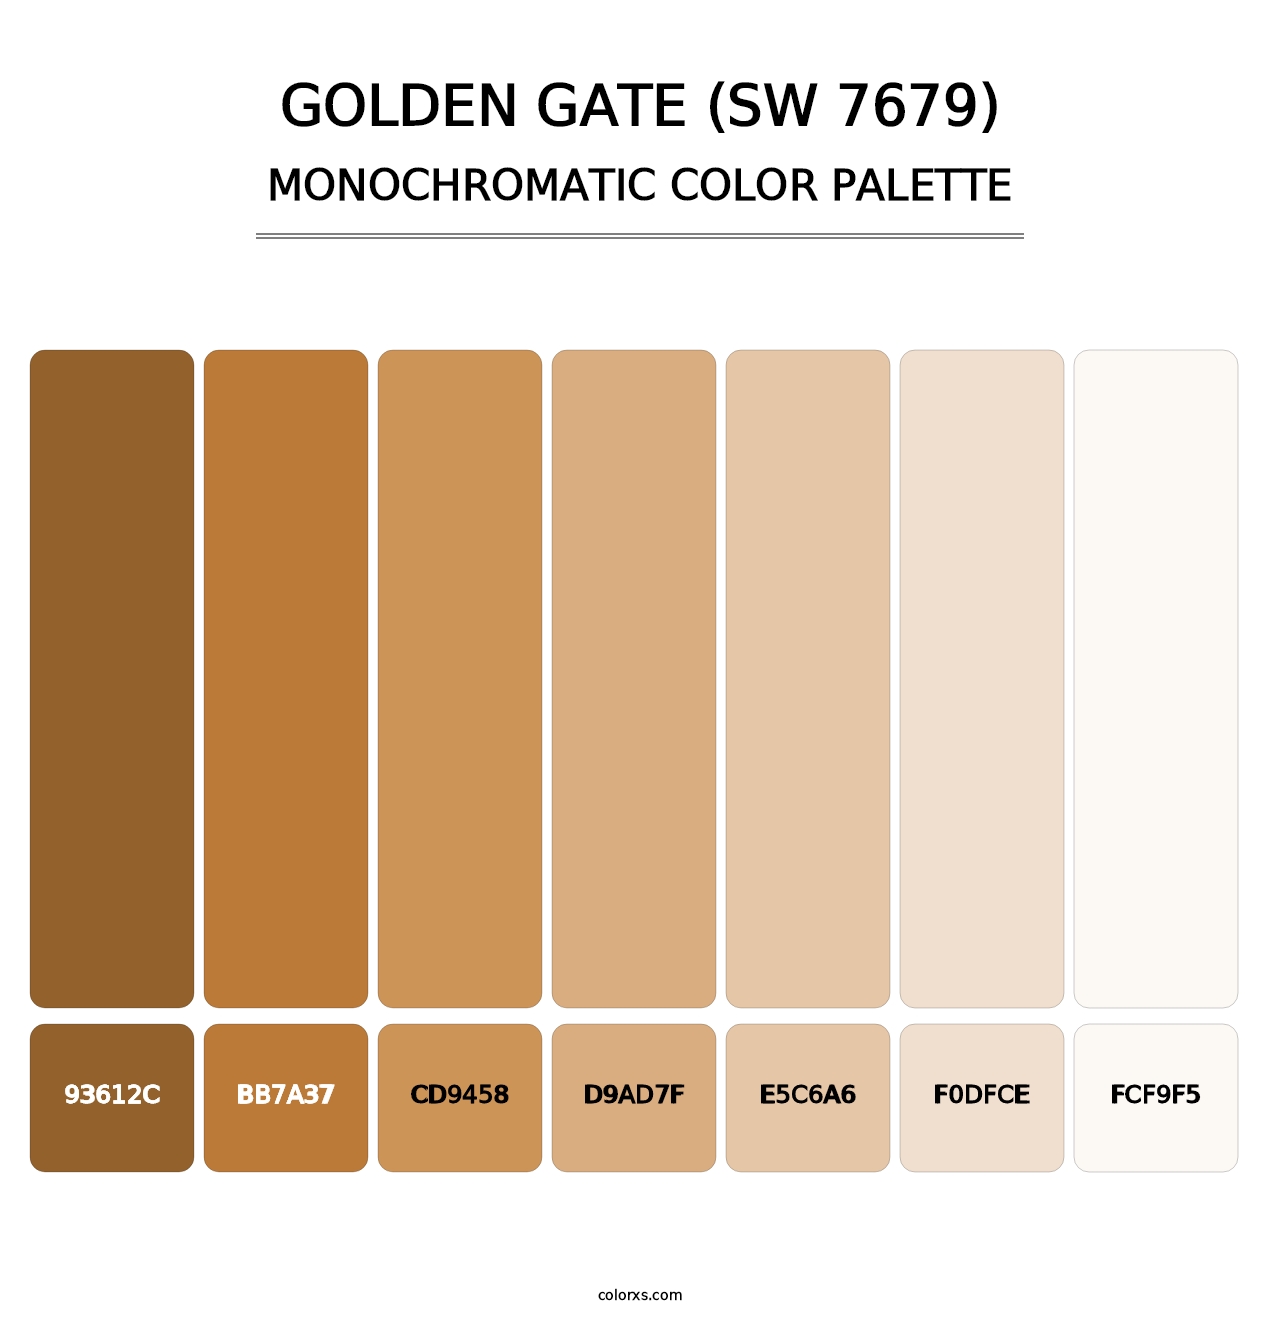 Golden Gate (SW 7679) - Monochromatic Color Palette